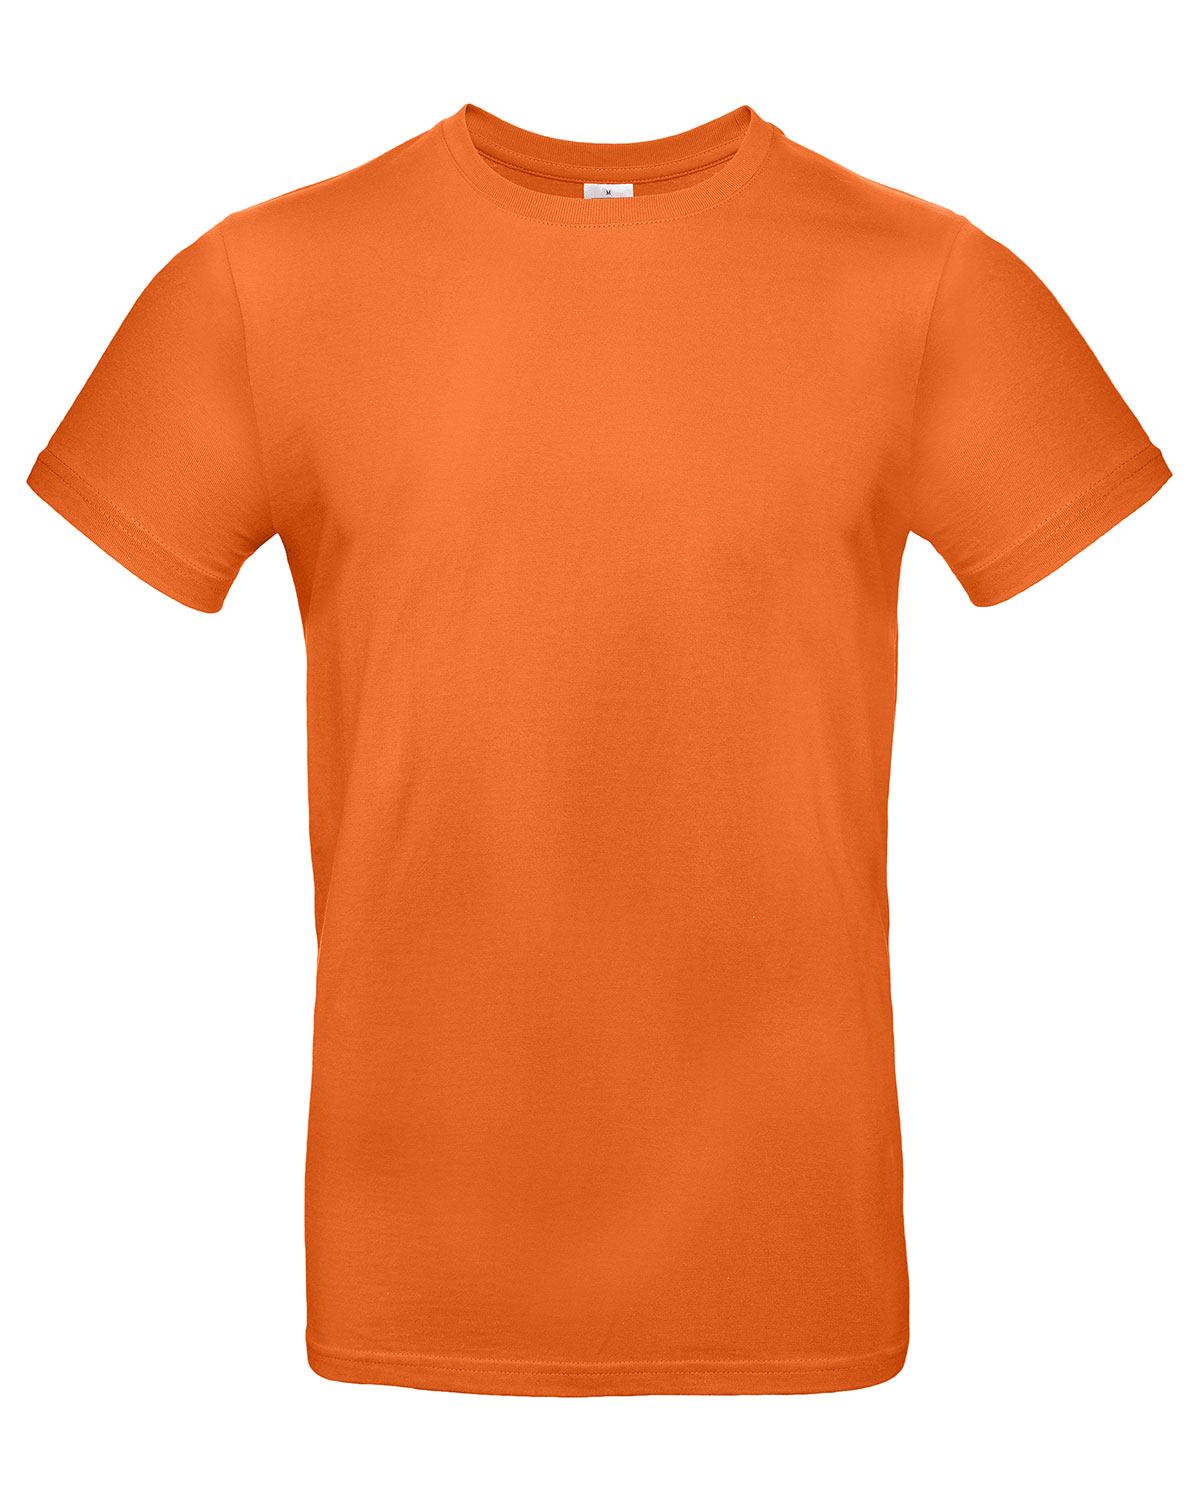 T-Shirt #E190 Urban Orange 3XL